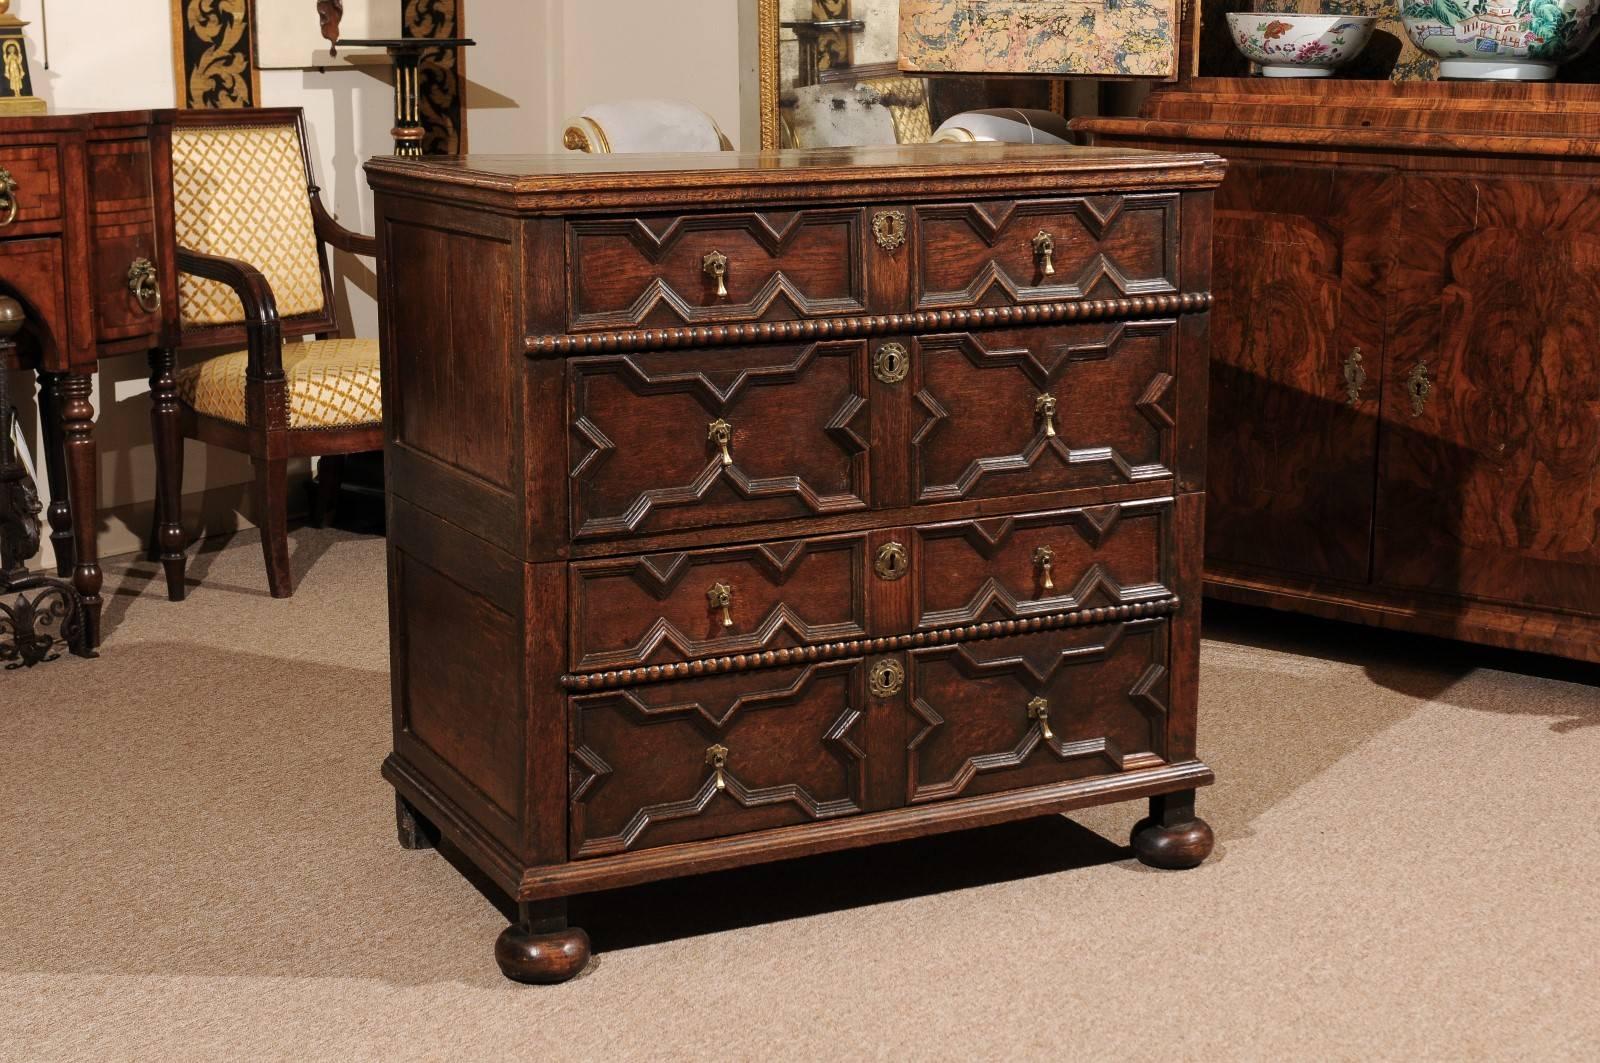 Jacobean style four-drawer chest in oak with bun feet, England 18th century.